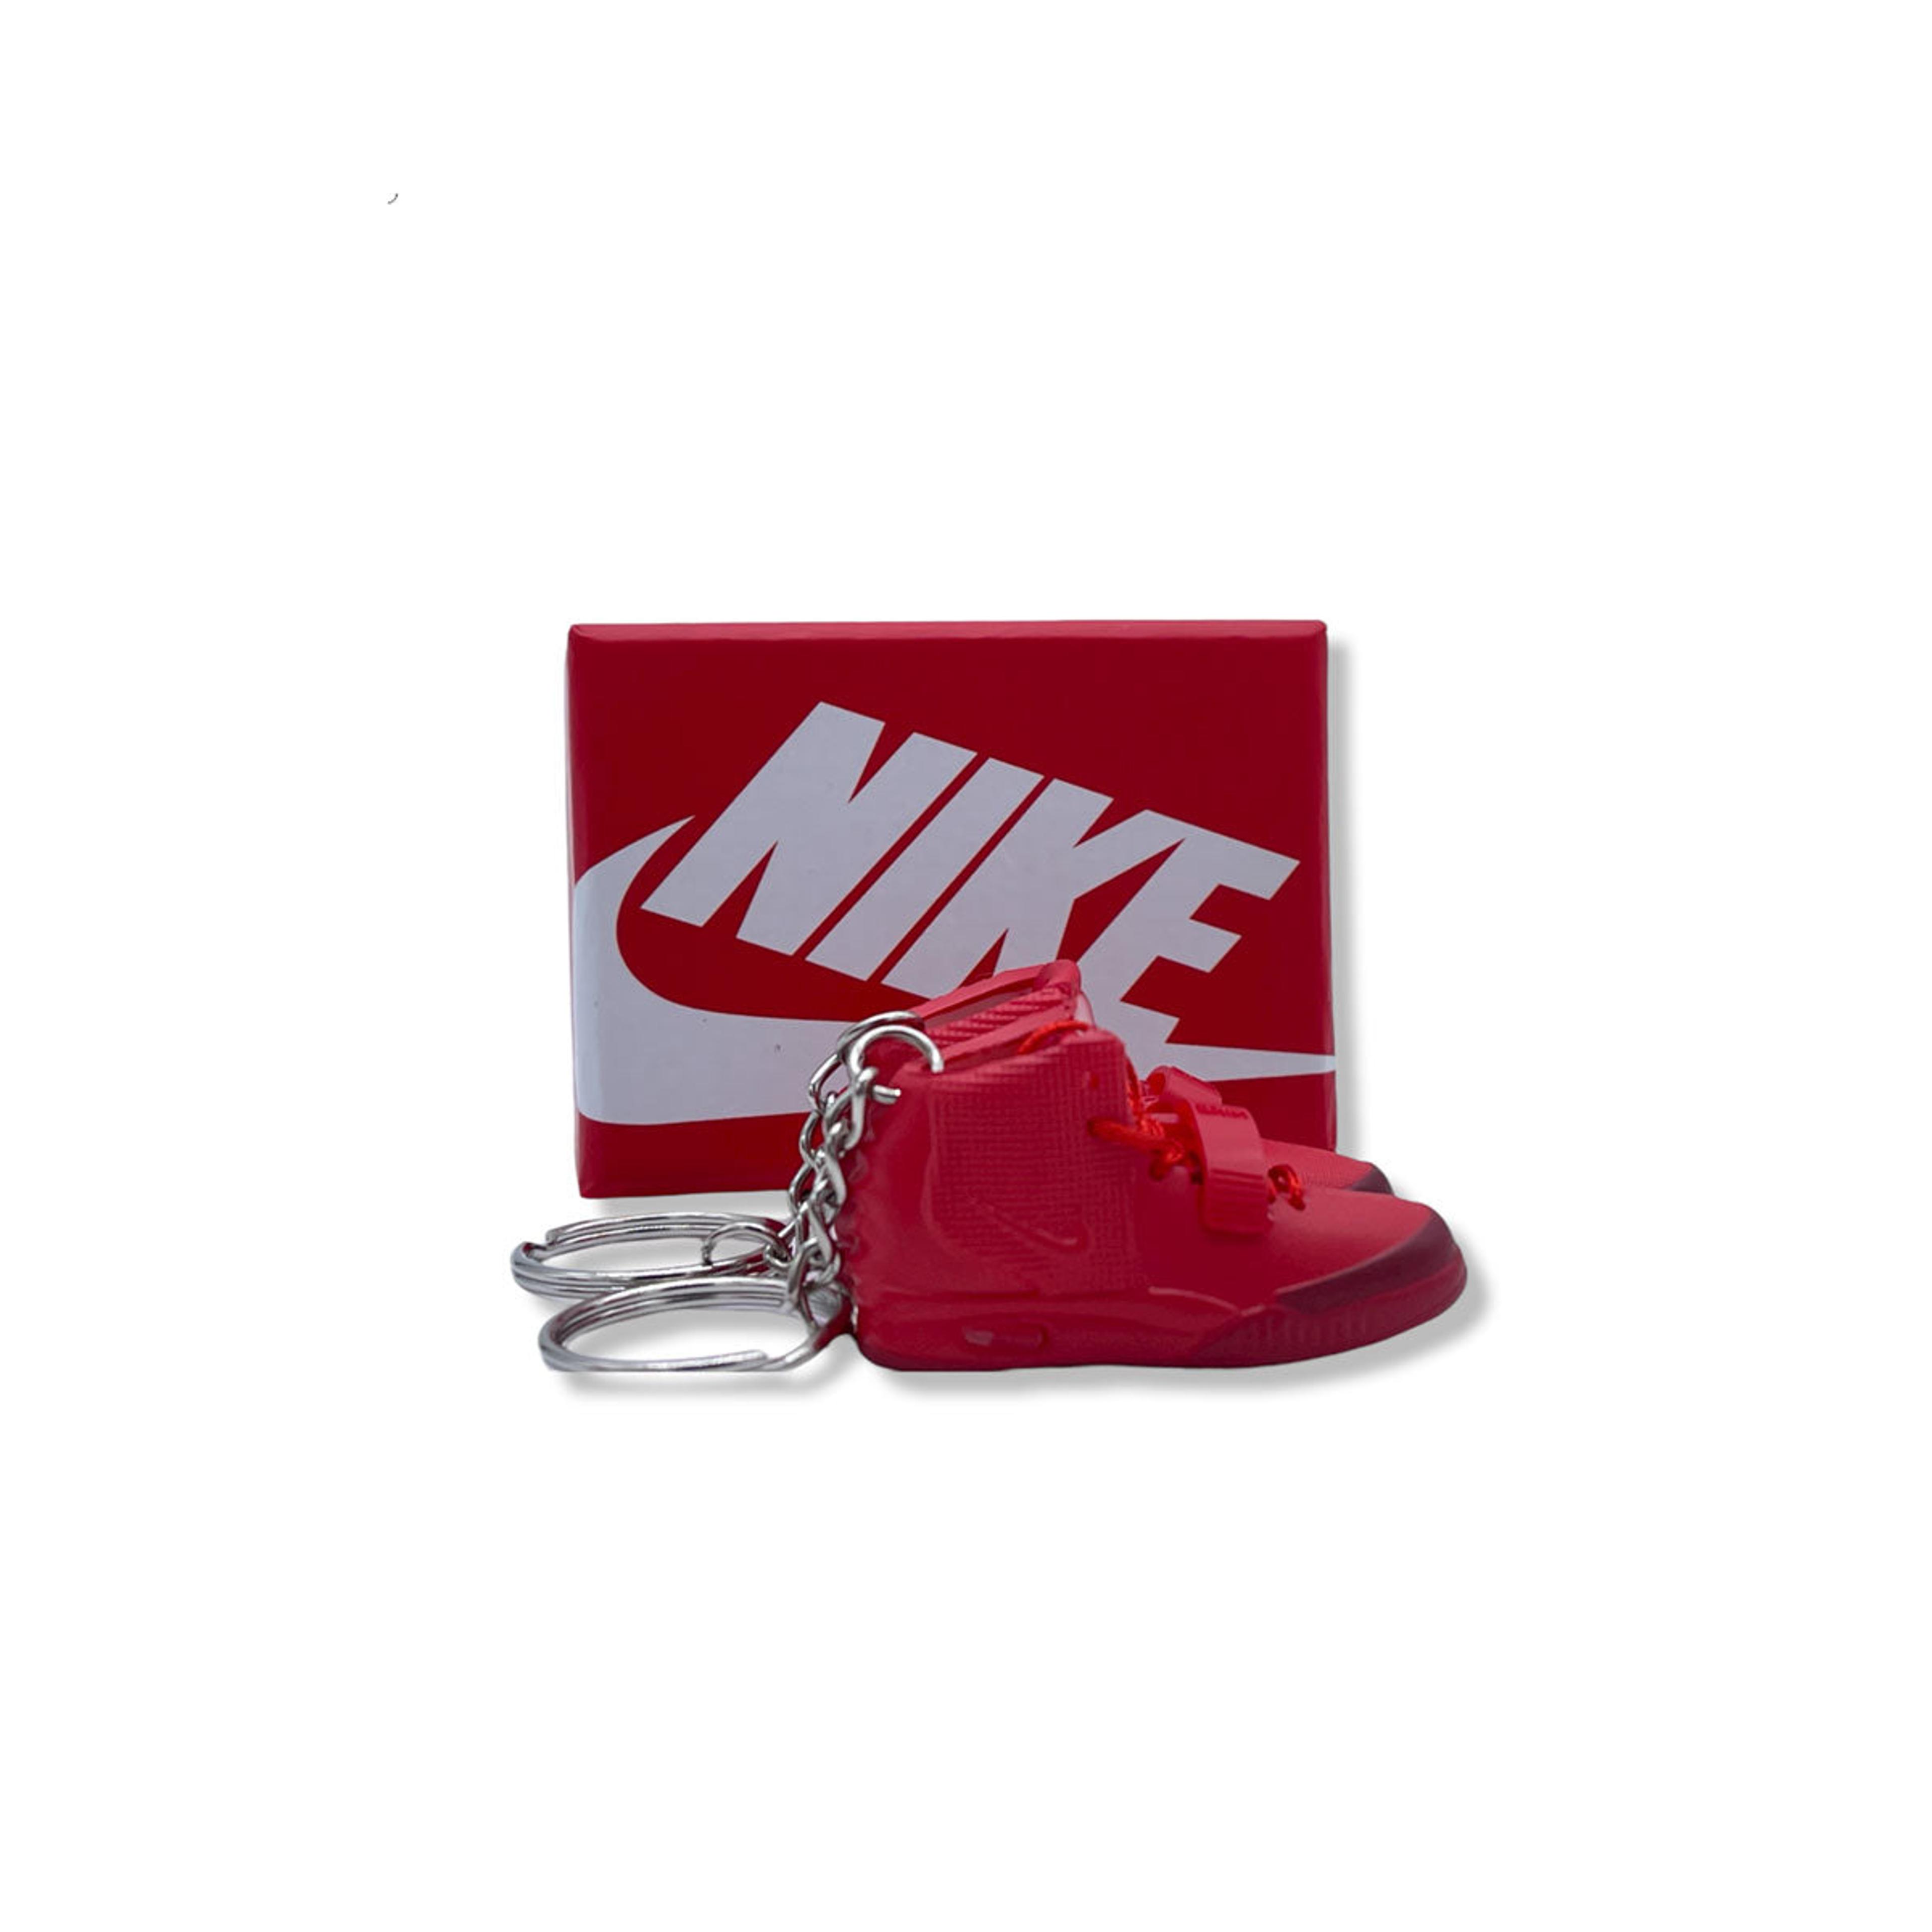 3D Sneaker Keychain- Nike Air Yeezy 2 Red October Pair